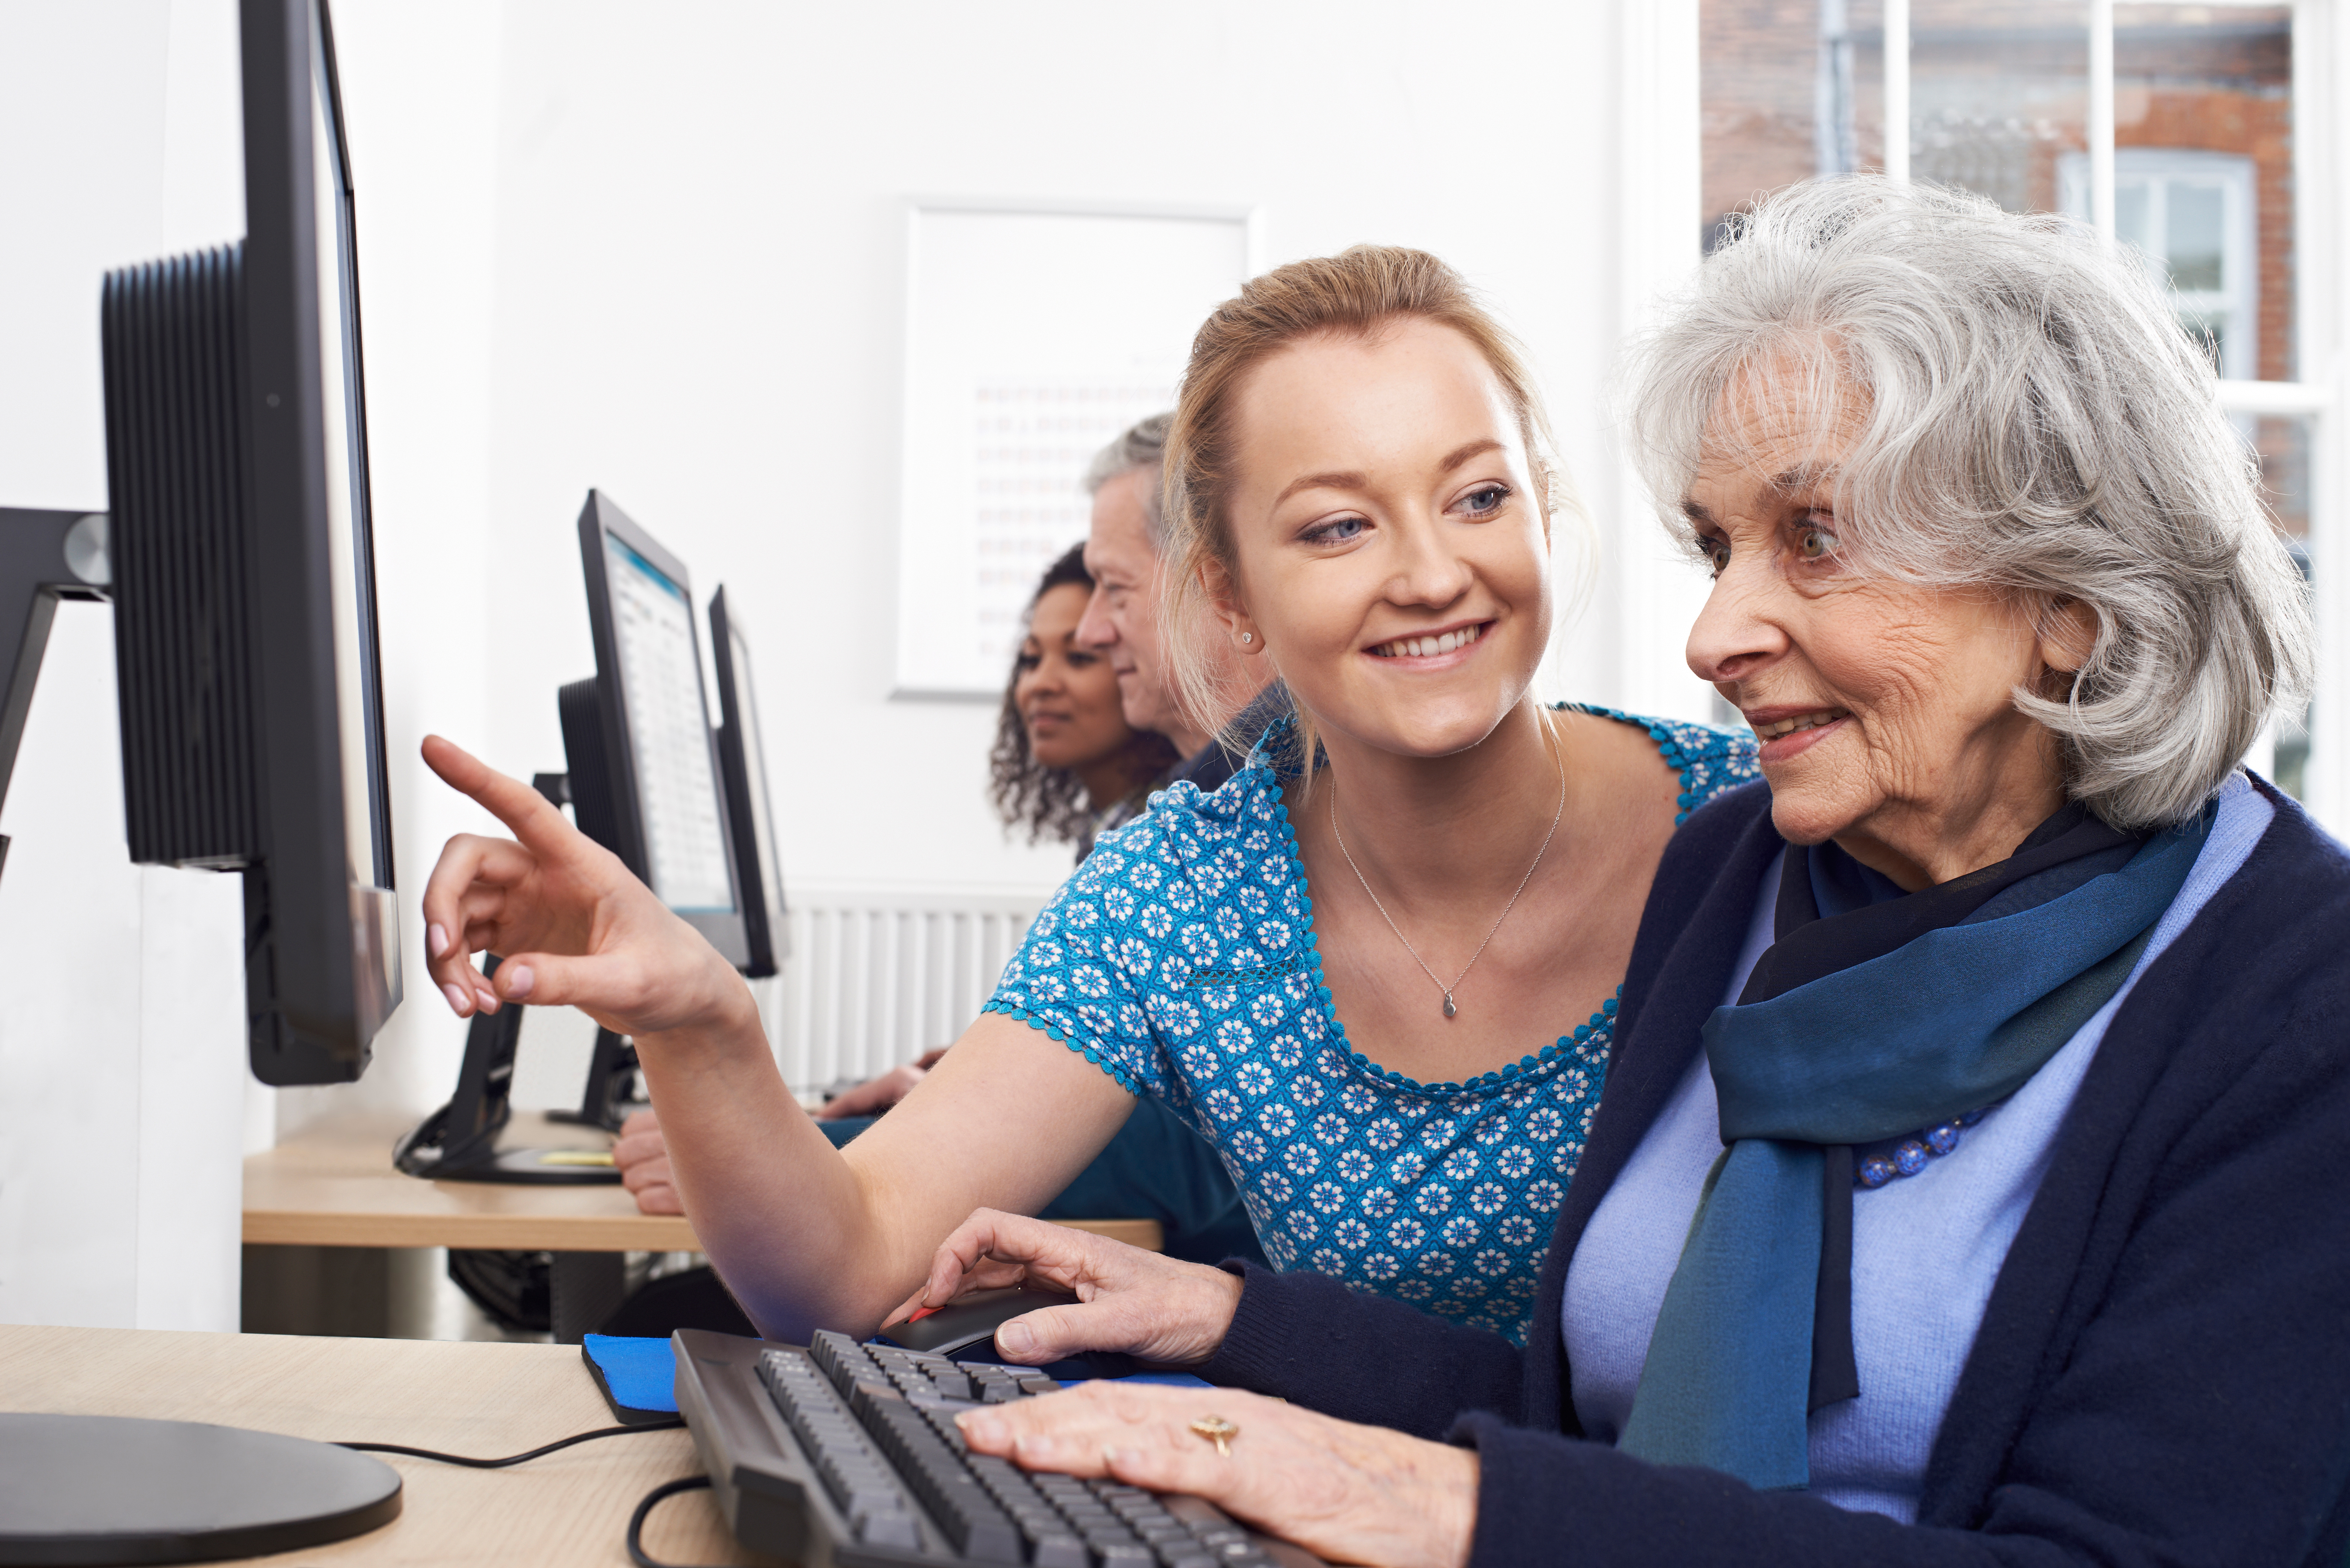 Younger women helping older woman on desktop computer